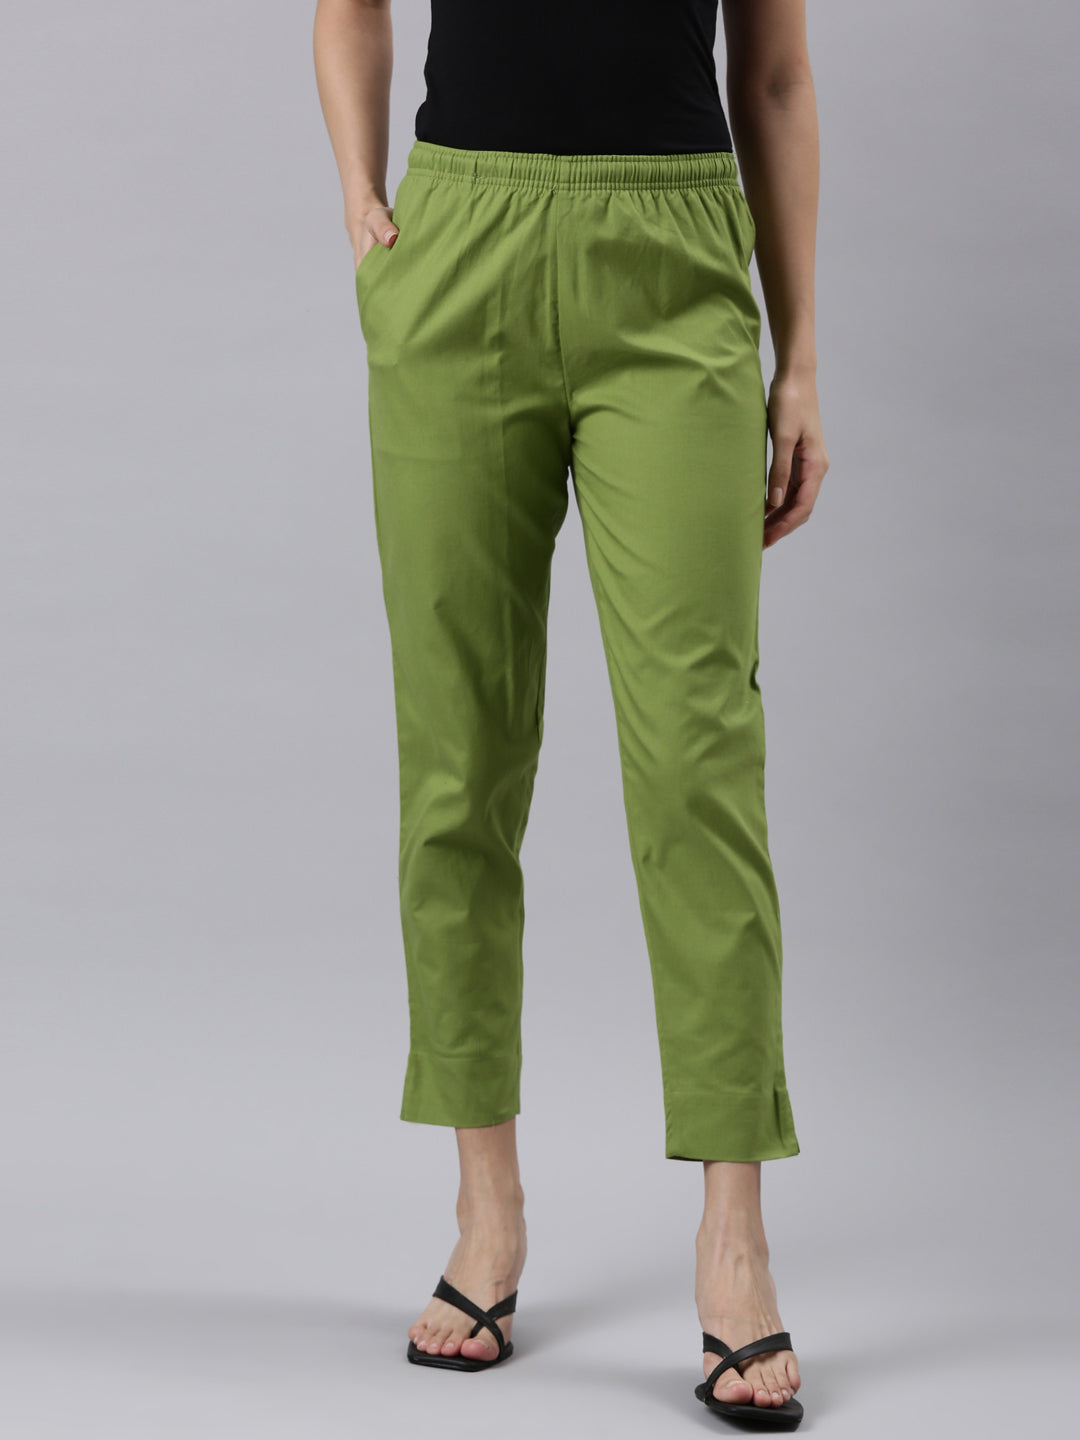 Green Pant Matching Shirts || Green Pants Combination Shirts Ideas - YouTube